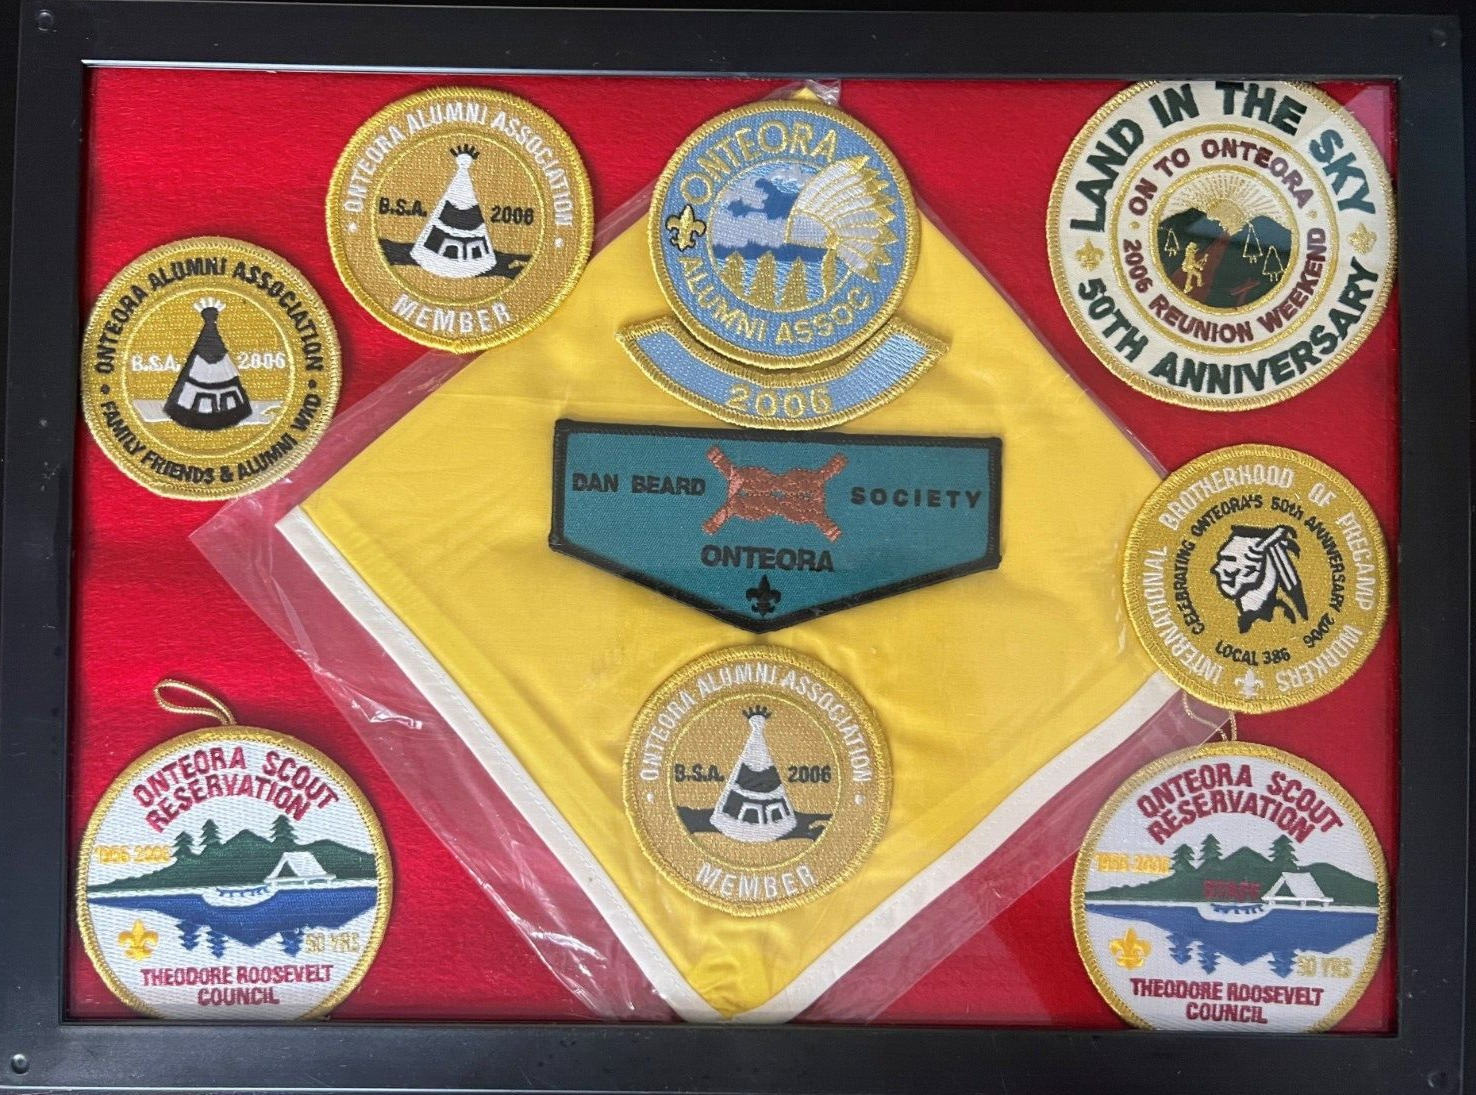 BSA Onteora Scout Reservation Framed Assorted Patch Set